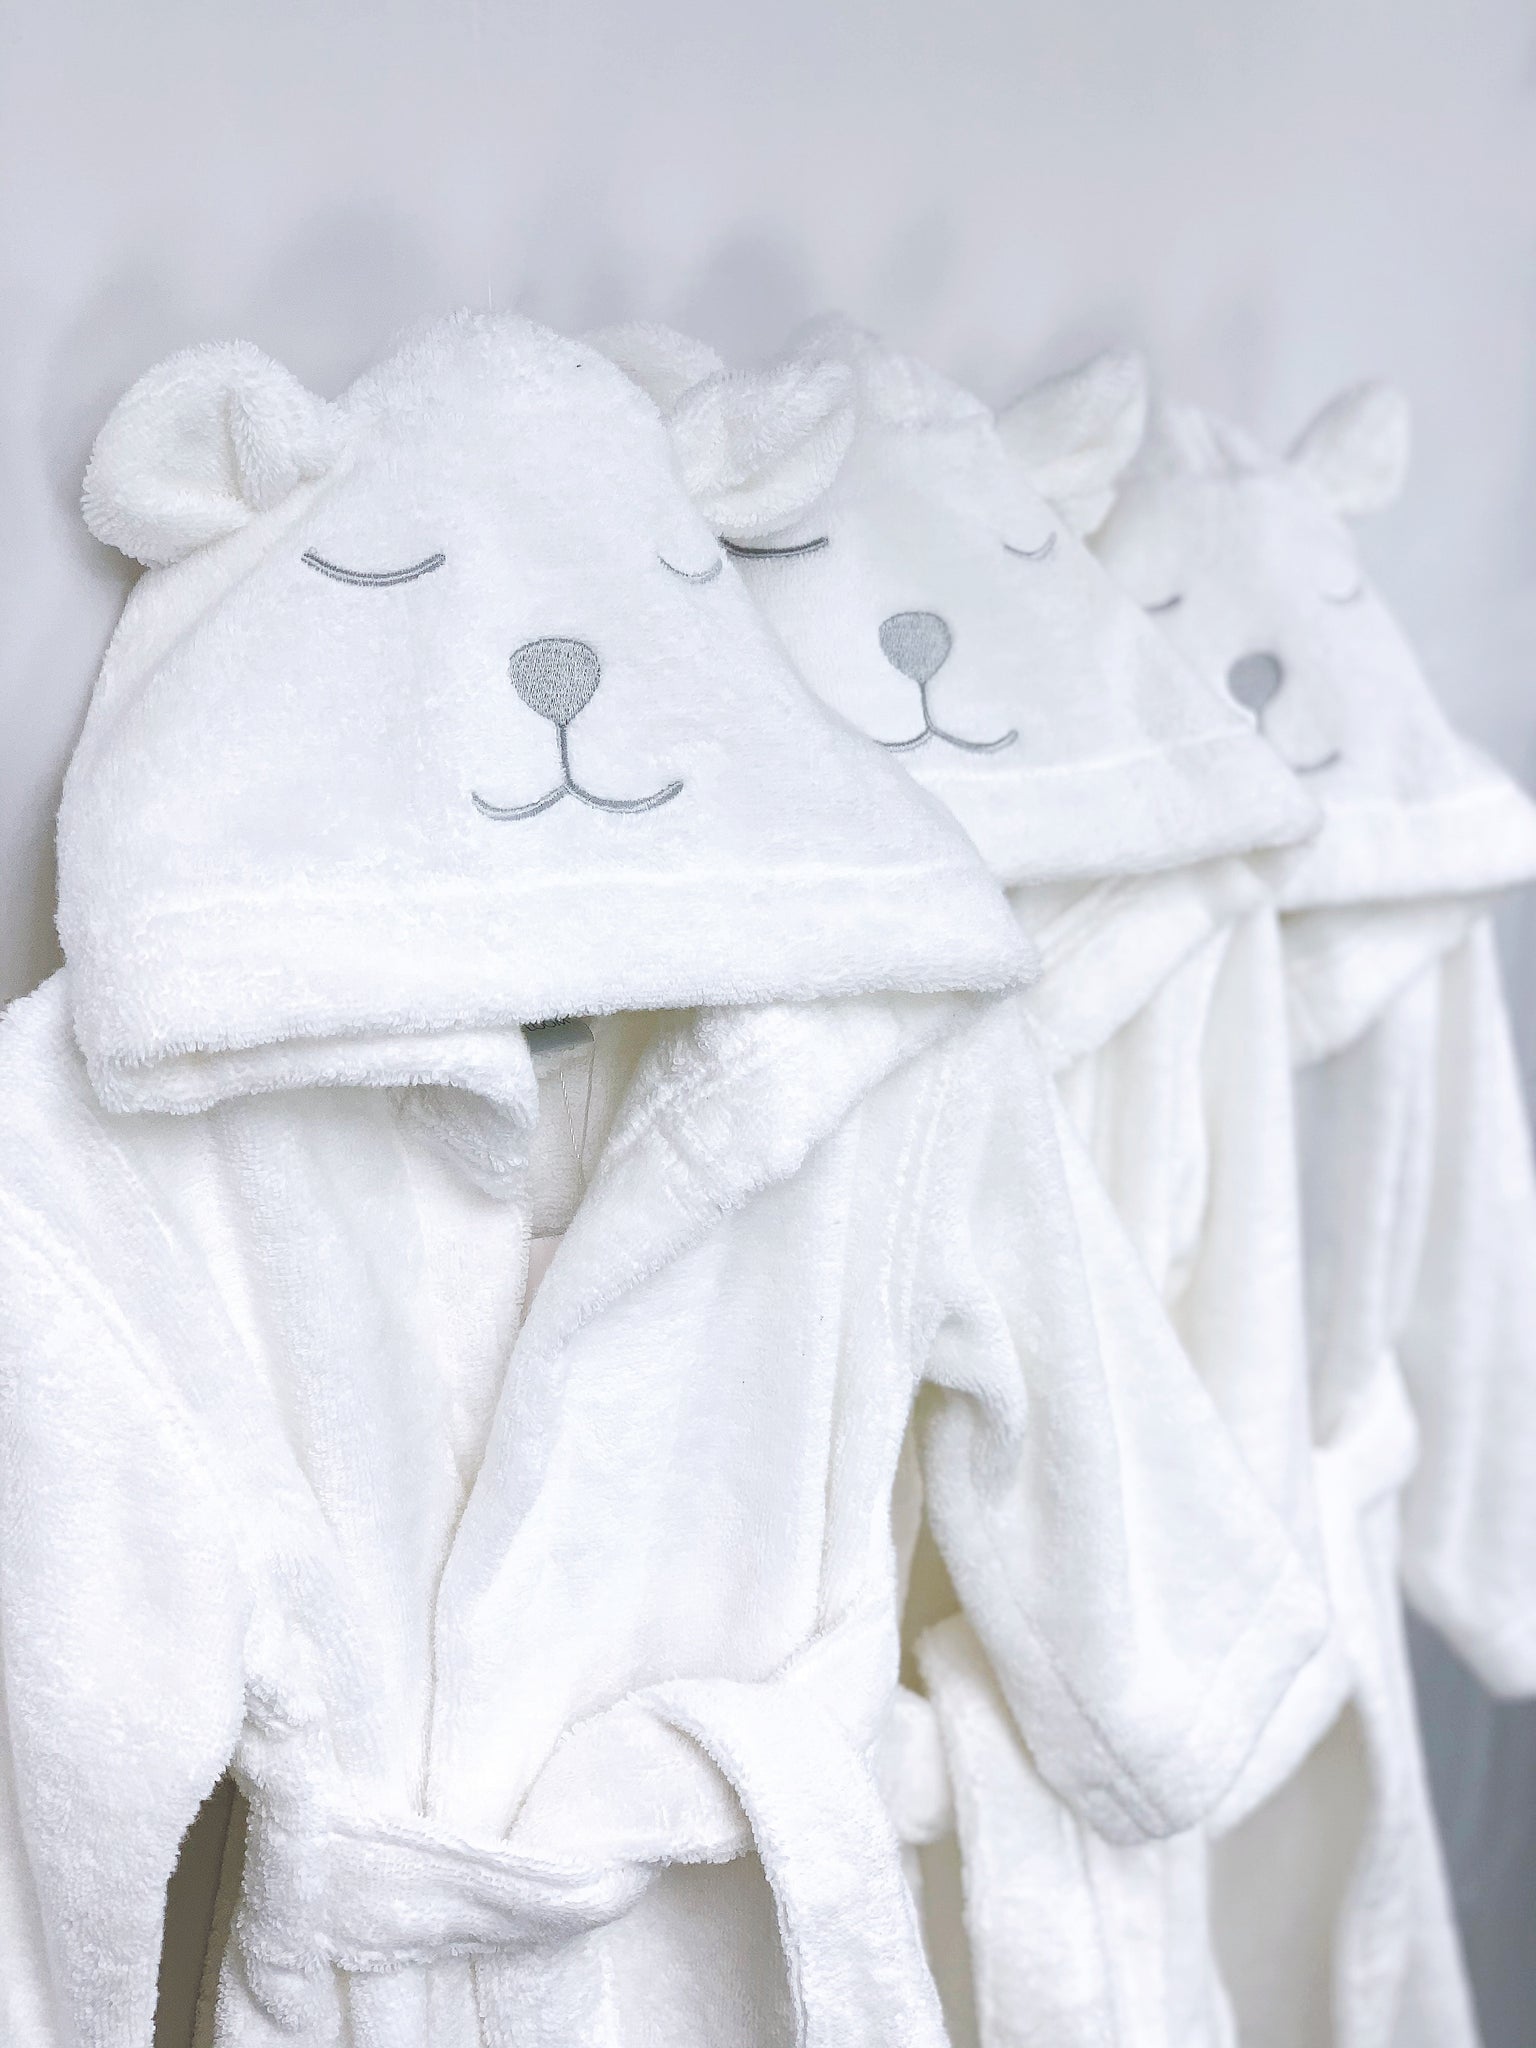 White Bear Hooded Bath Robe